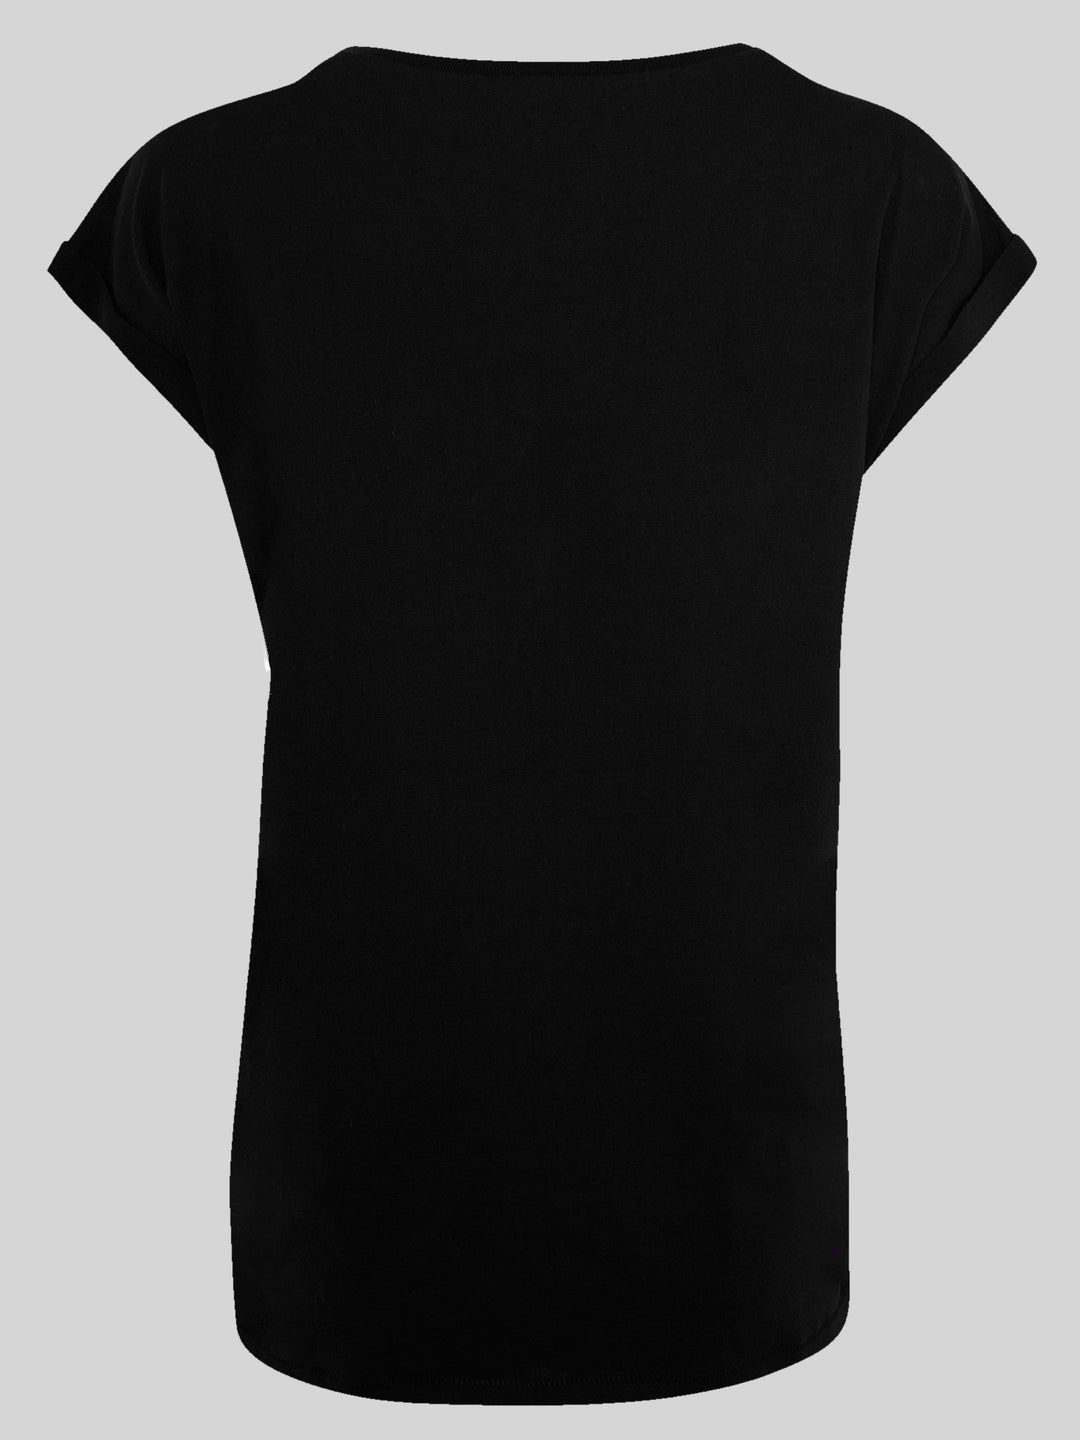 David Bowie T-Shirt | Earls Court Heroes | Premium Kurzarm Damen T Shirt